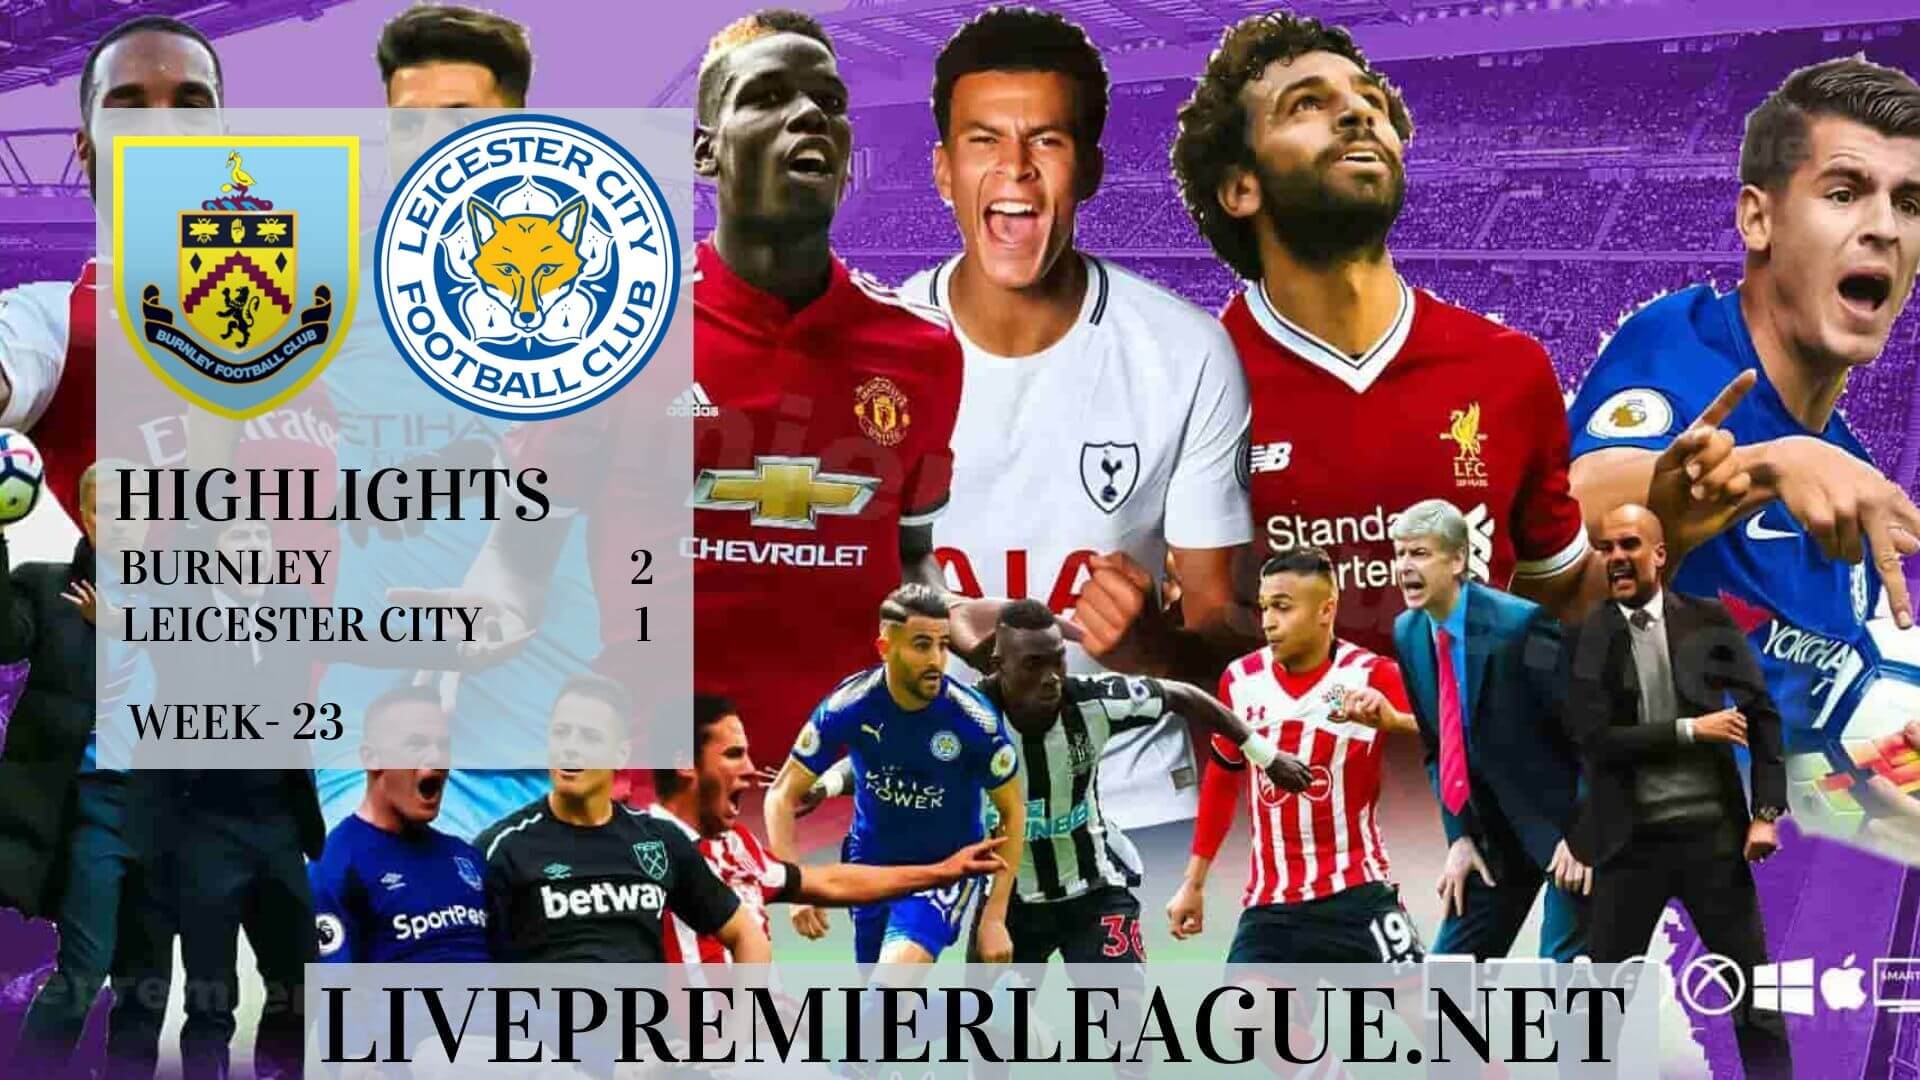 Burnley Vs Leicester City Highlights 2020 Week 23